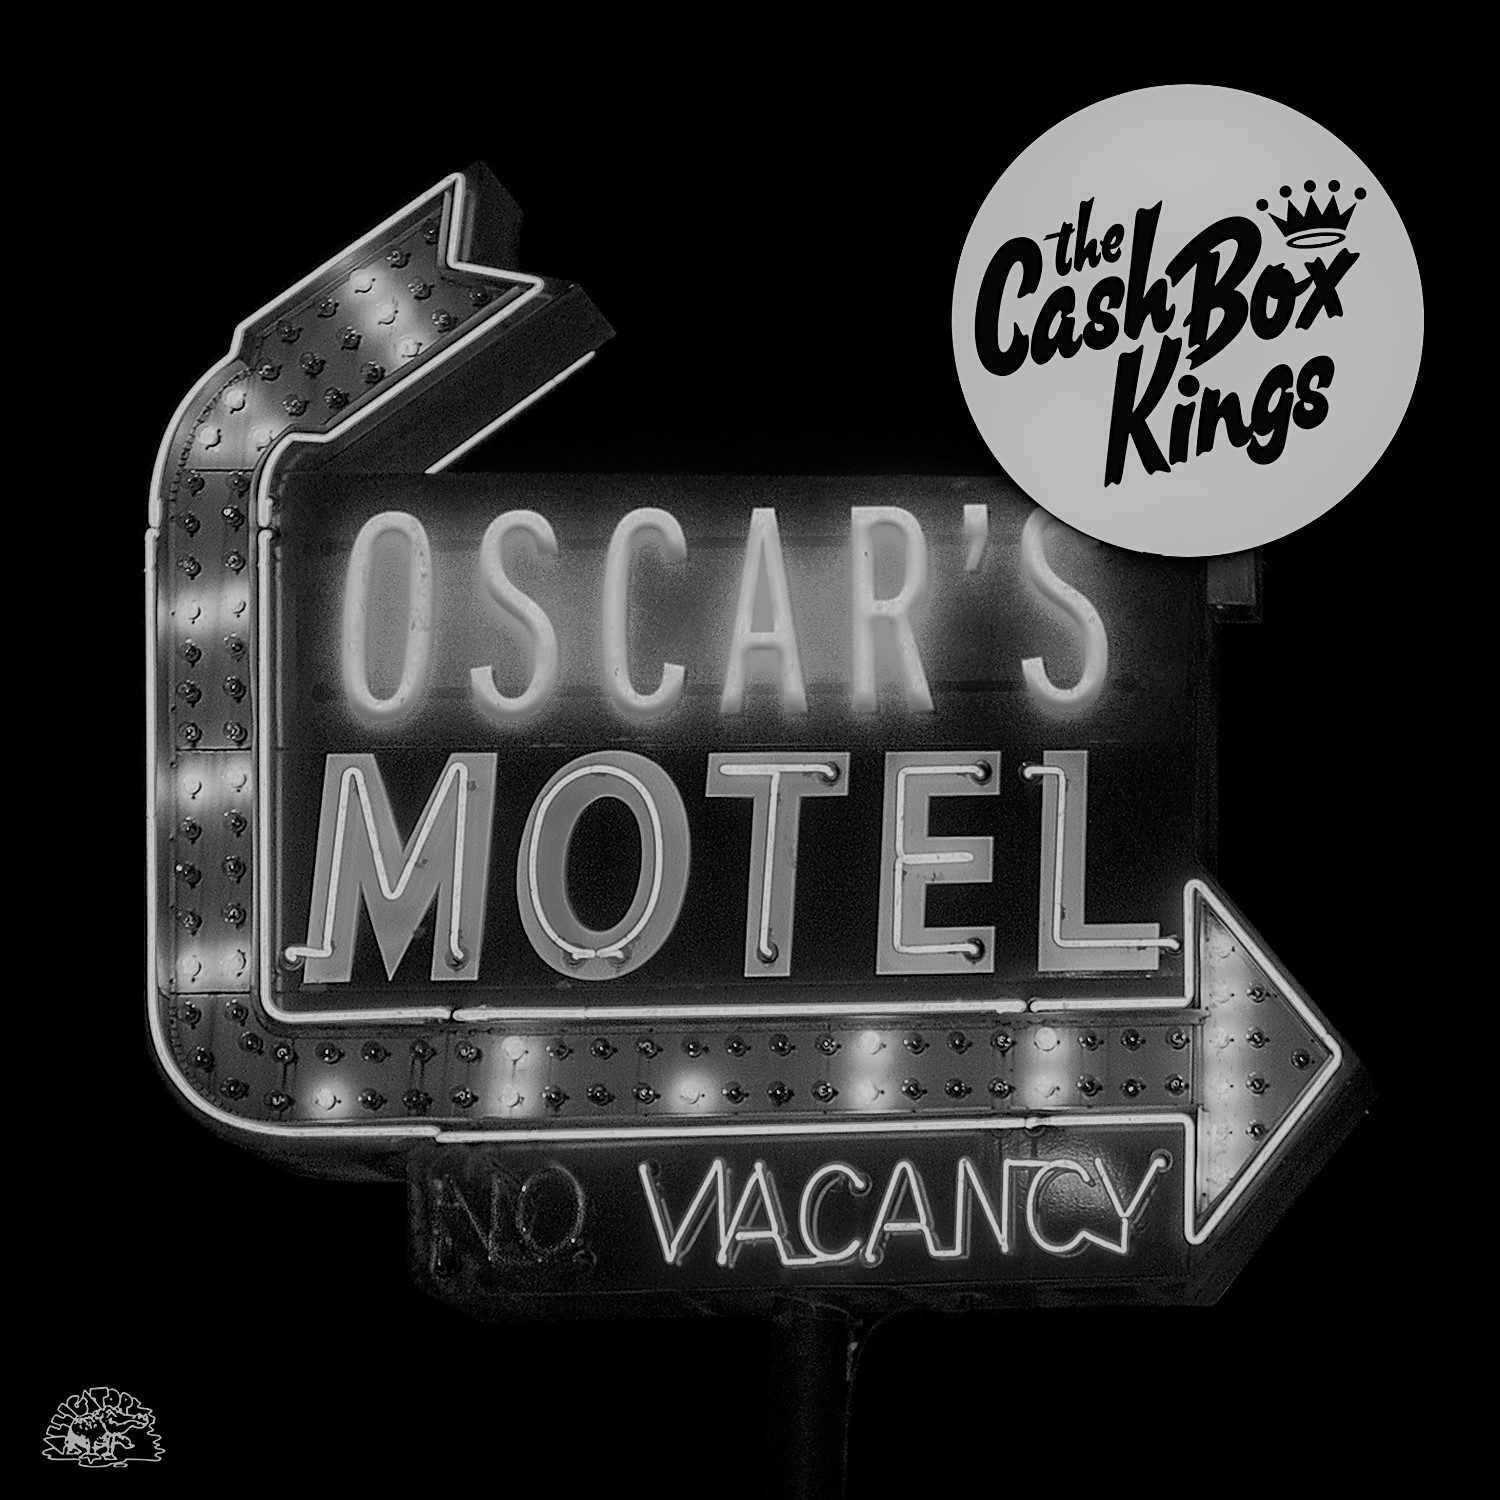 The Cash Box Kings - Oscar's Motel cover album